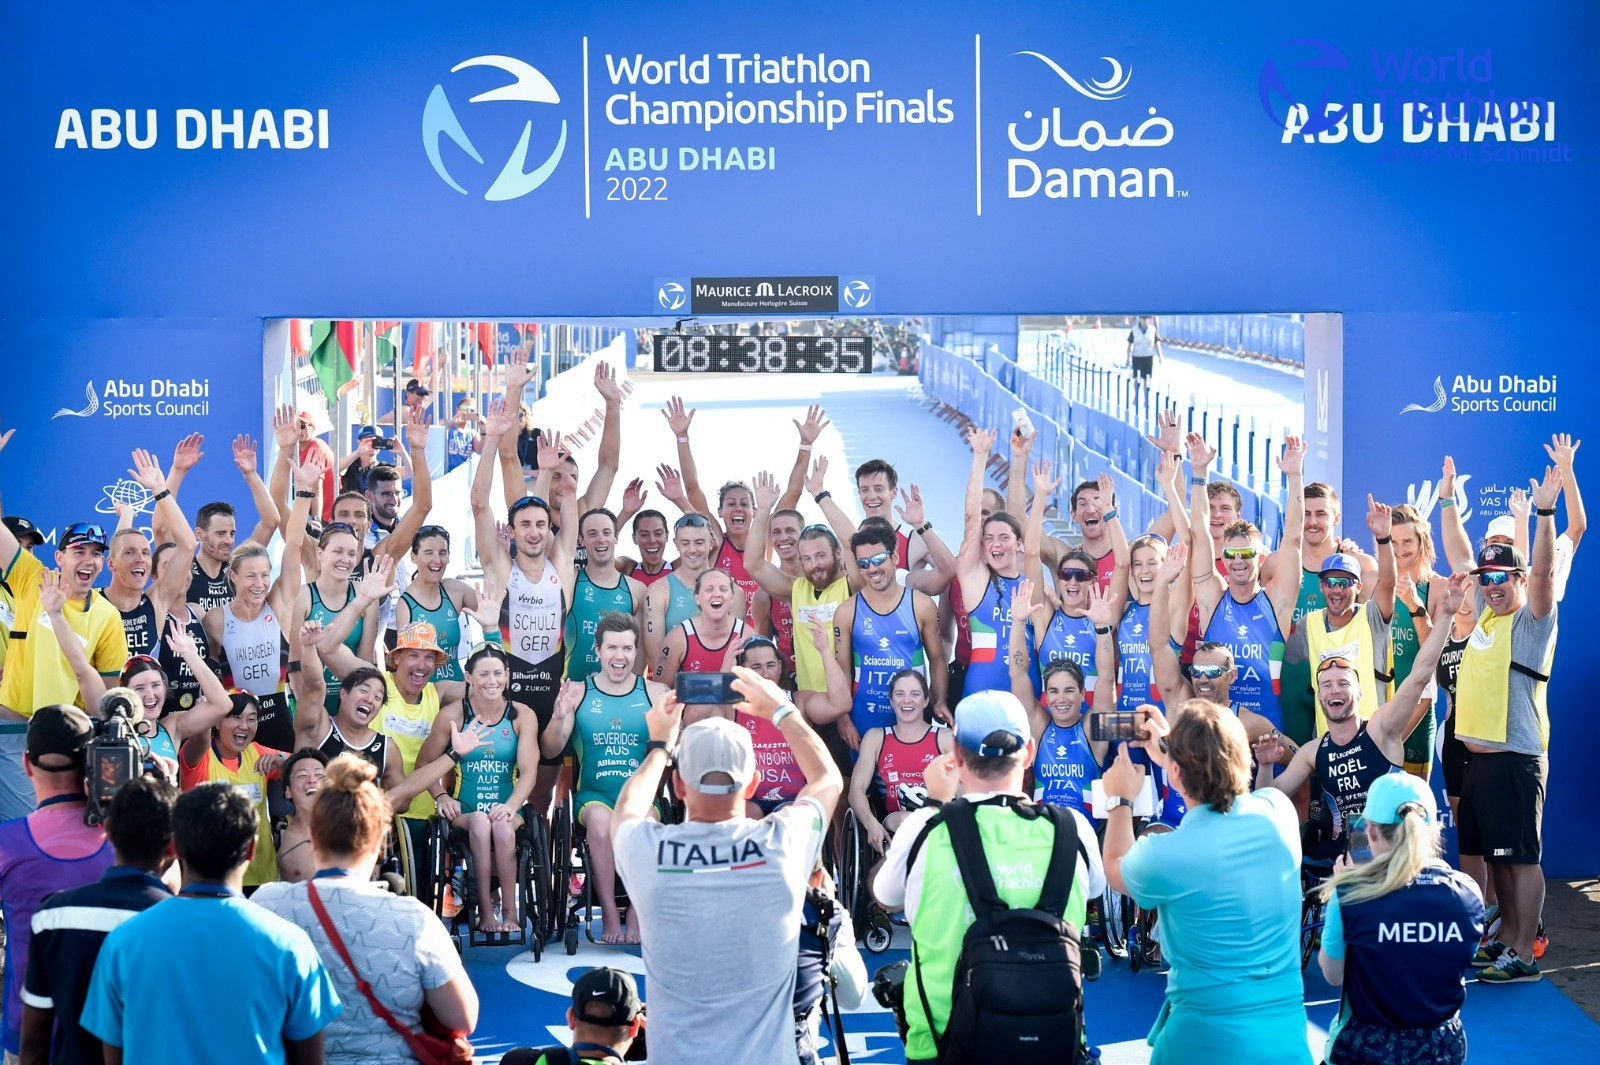 World Triathlon vice-president Debbie Alexander said the Para triathlon mixed relay was 